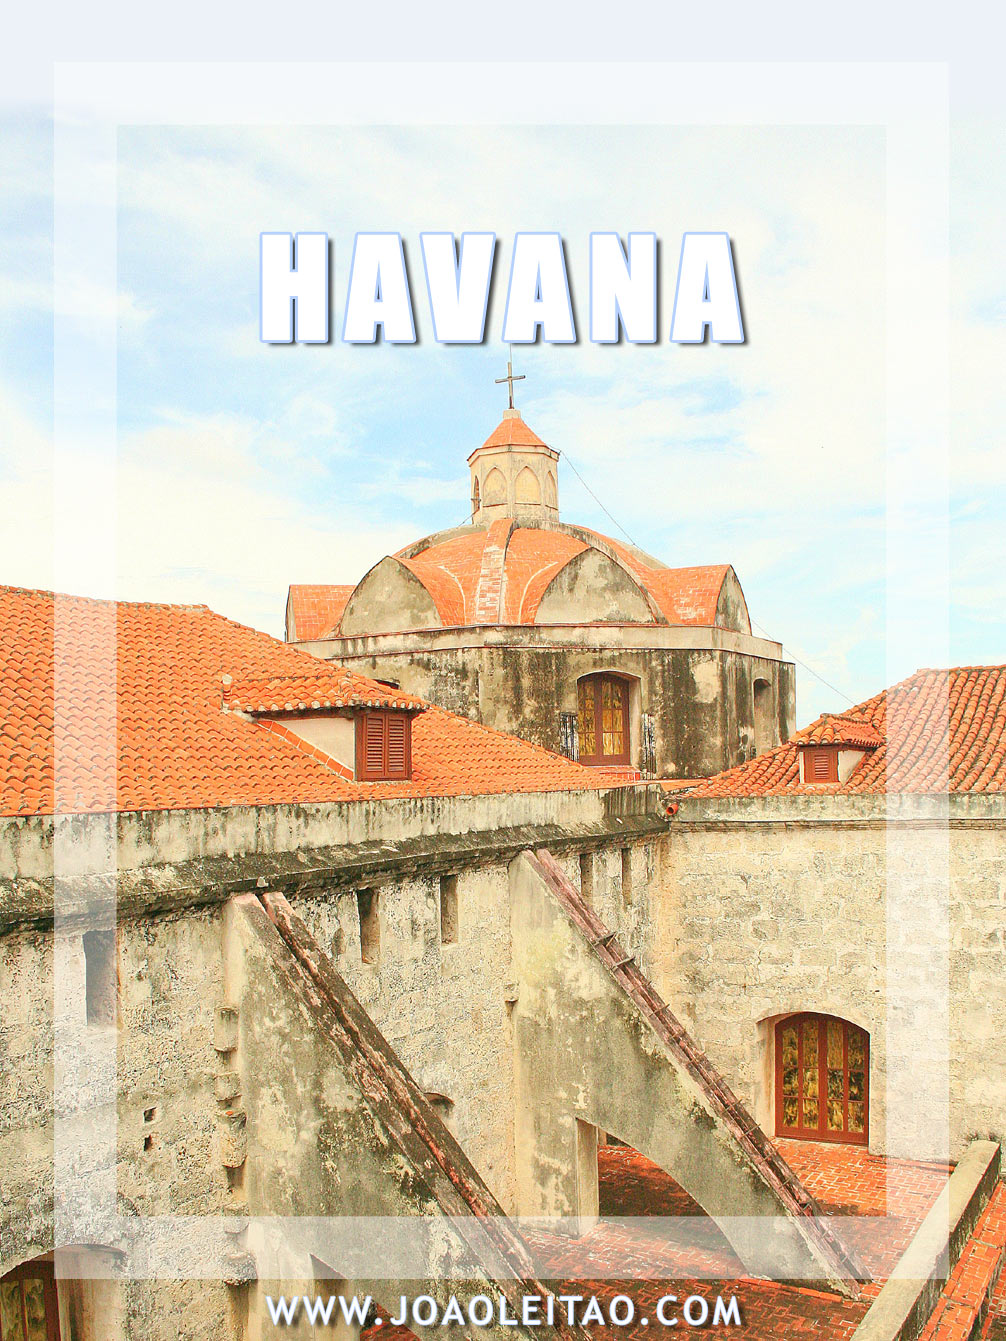 Havana free local in dating site Havana dating,